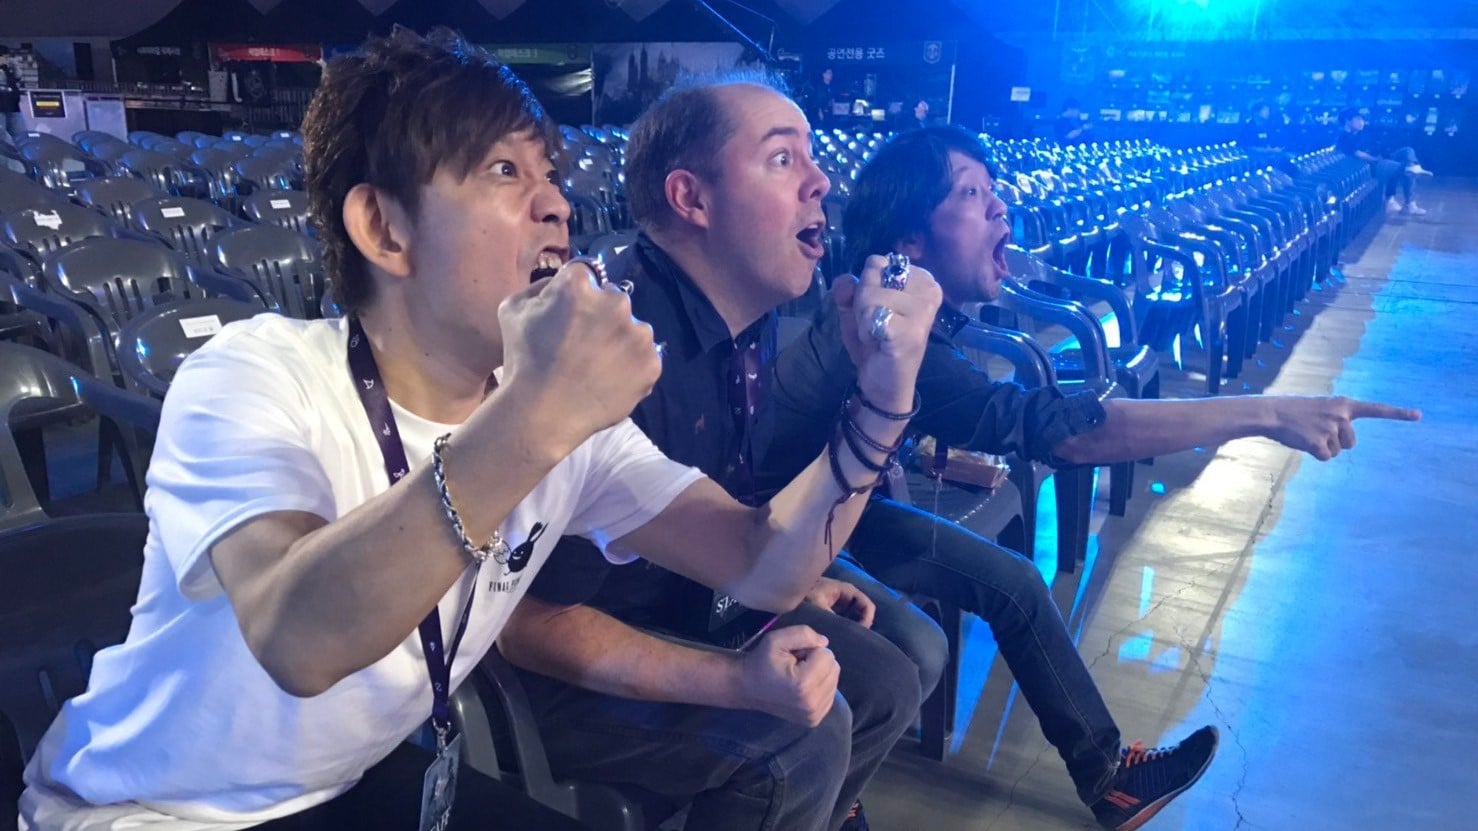 Final Fantasy XIV's development team including Naoki Yoshida and Koji Fox, cheer during a live performance of the game's soundtrack